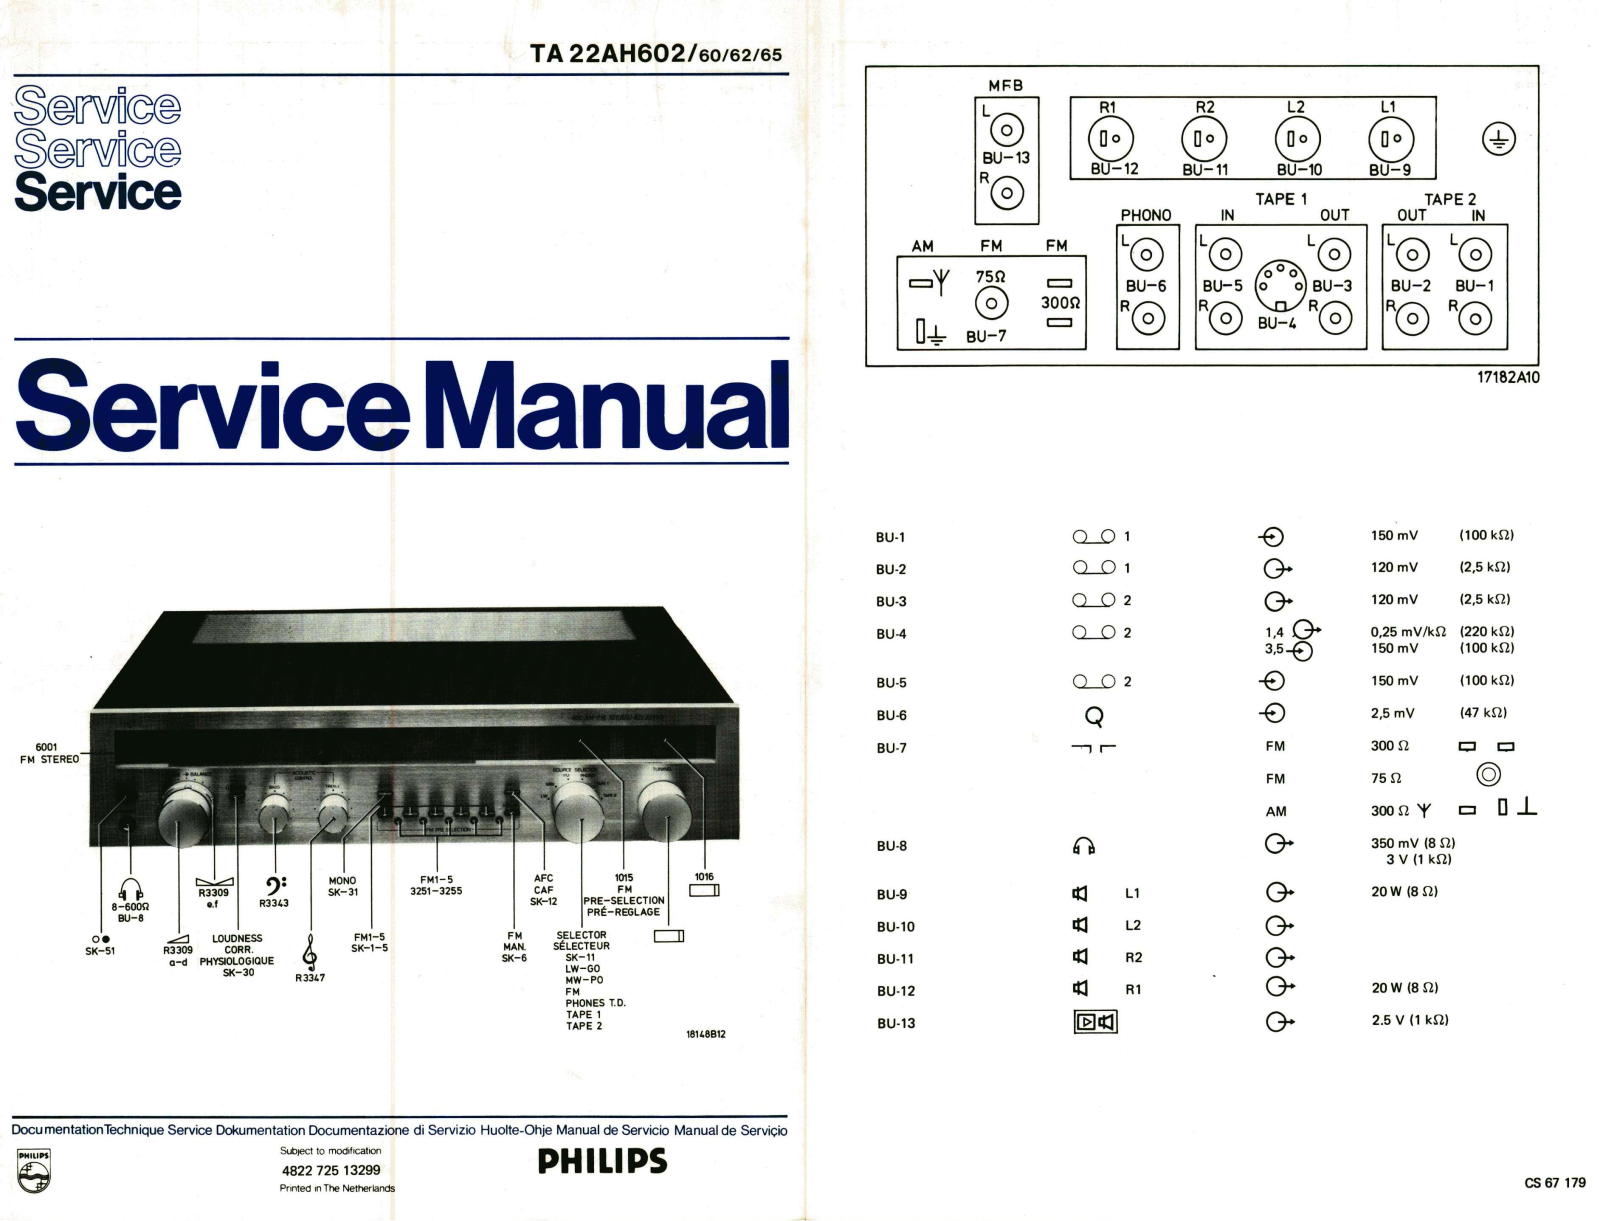 Philips 22-AH-602 Service Manual